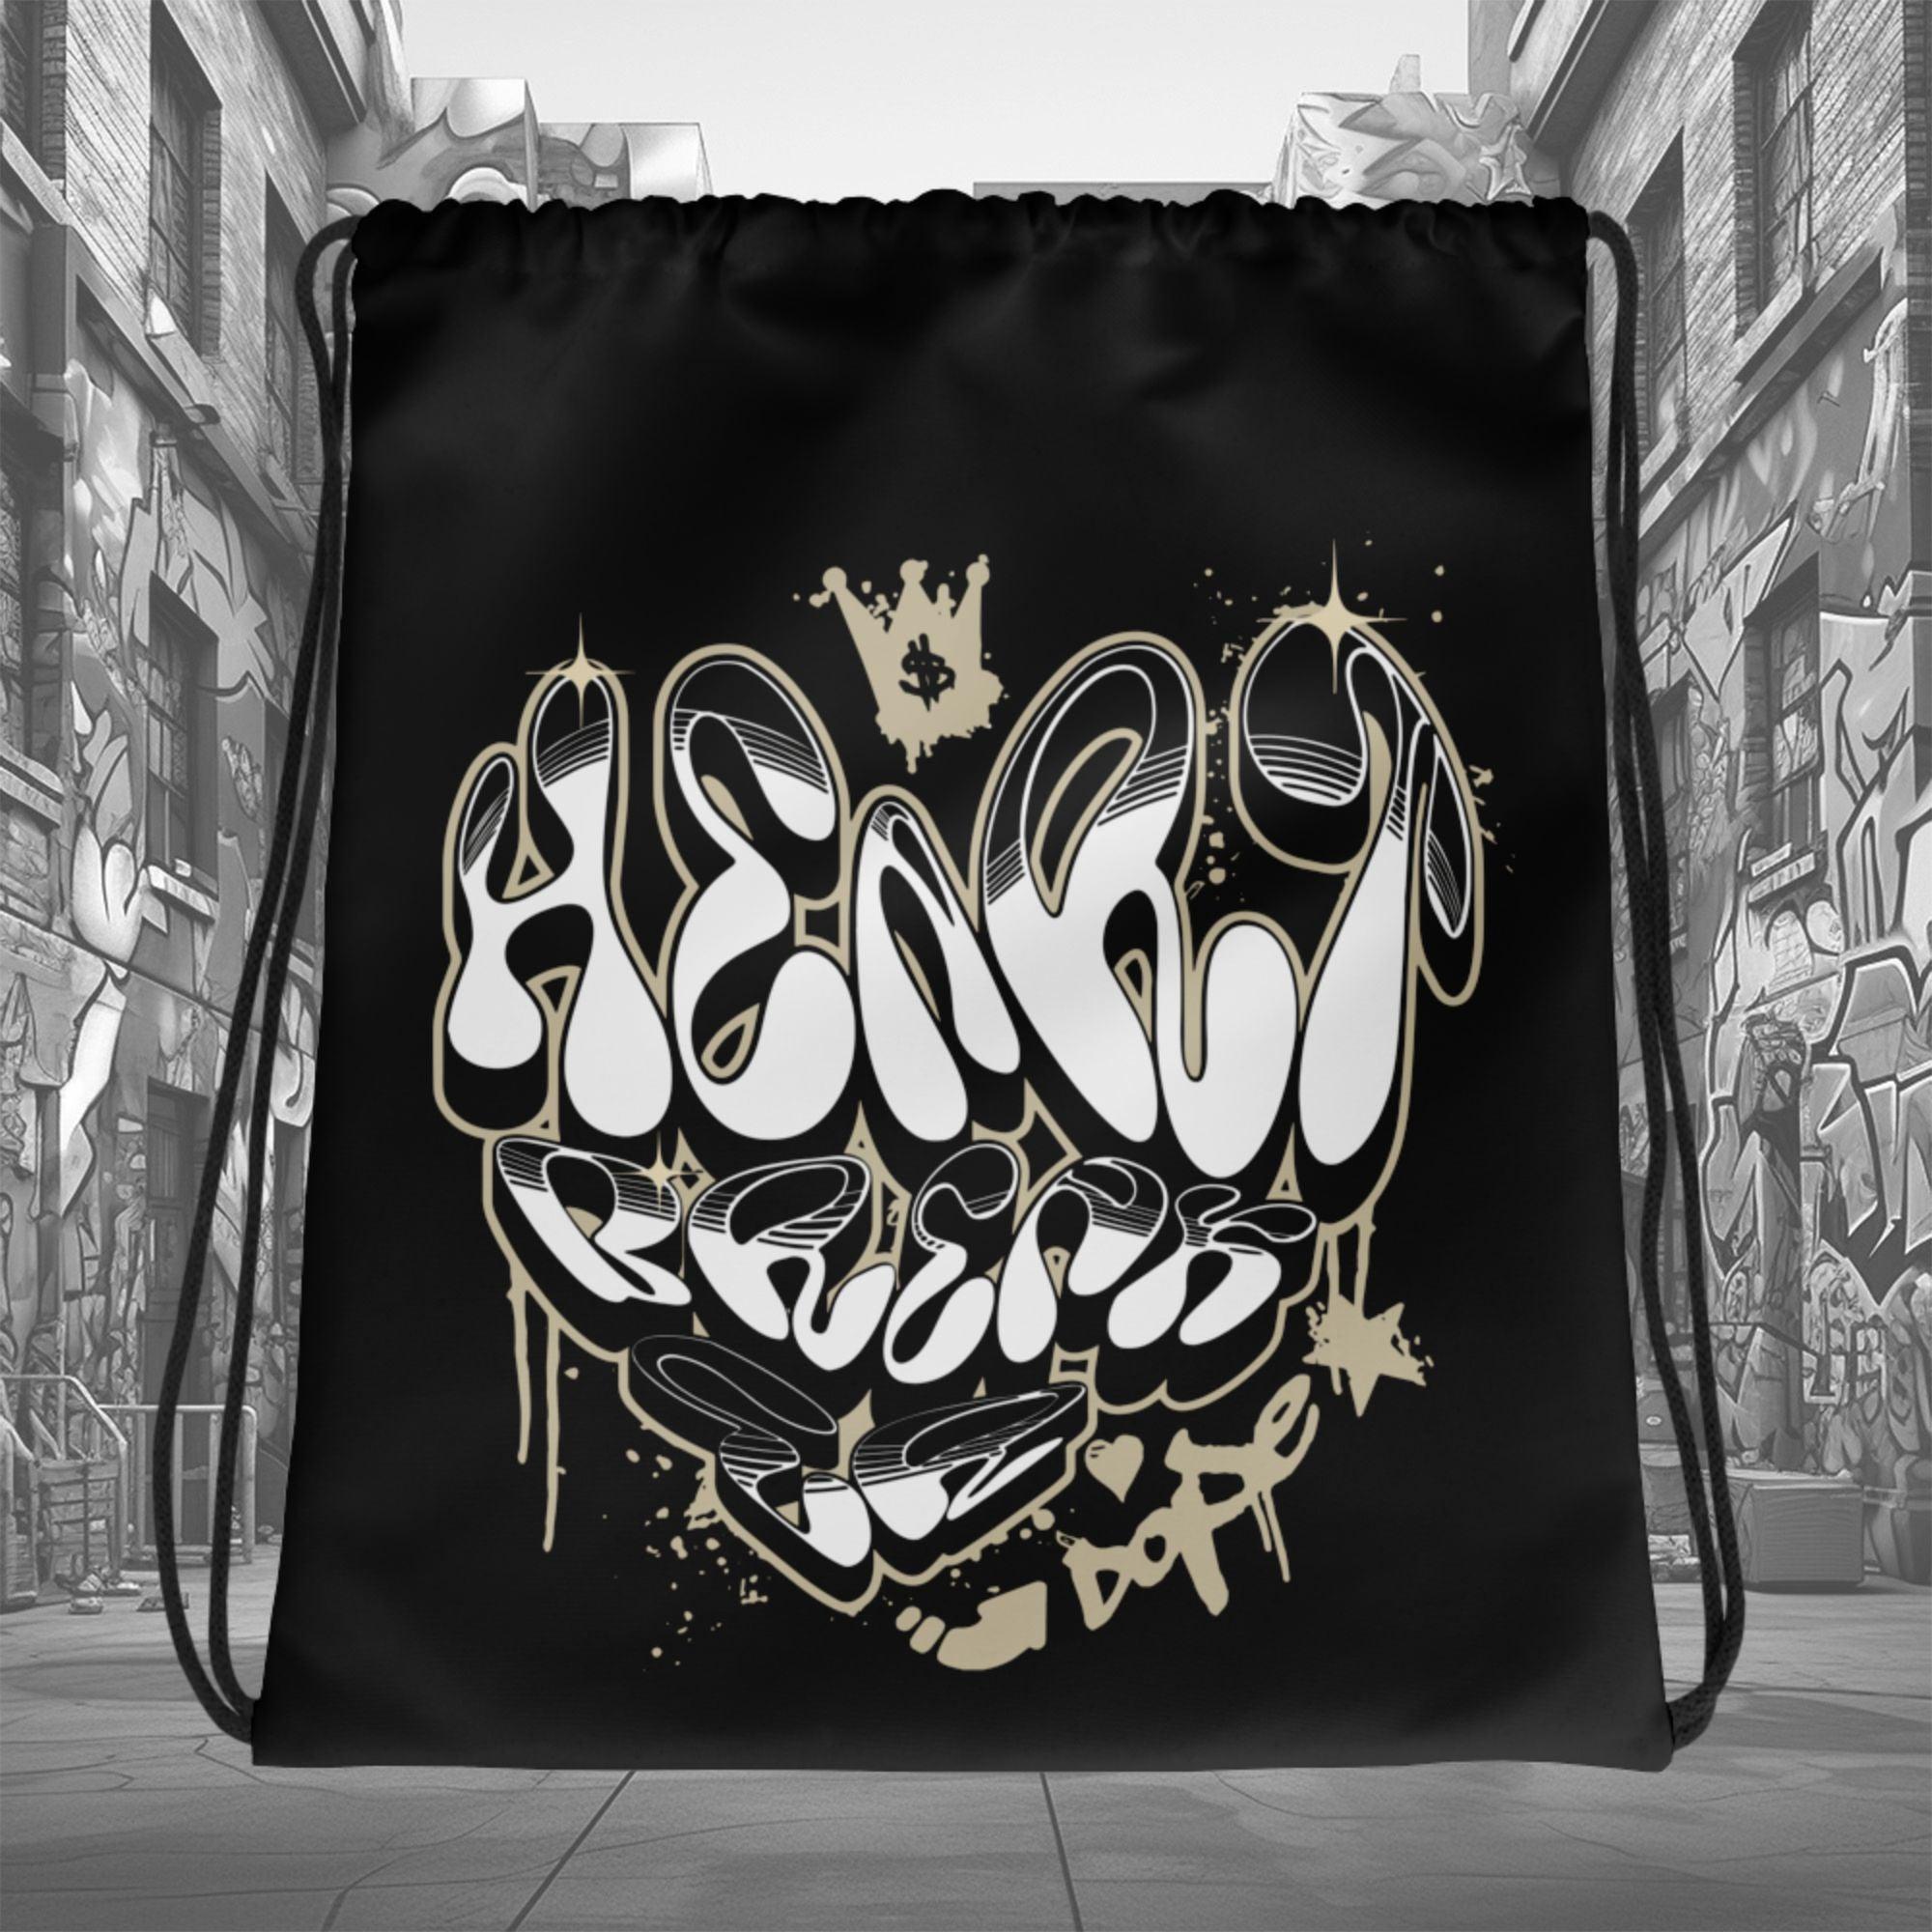 Amazing Black Heartbreaker Graffiti Drawstring Bag AIR JORDAN 11 GRATITUDE photo.